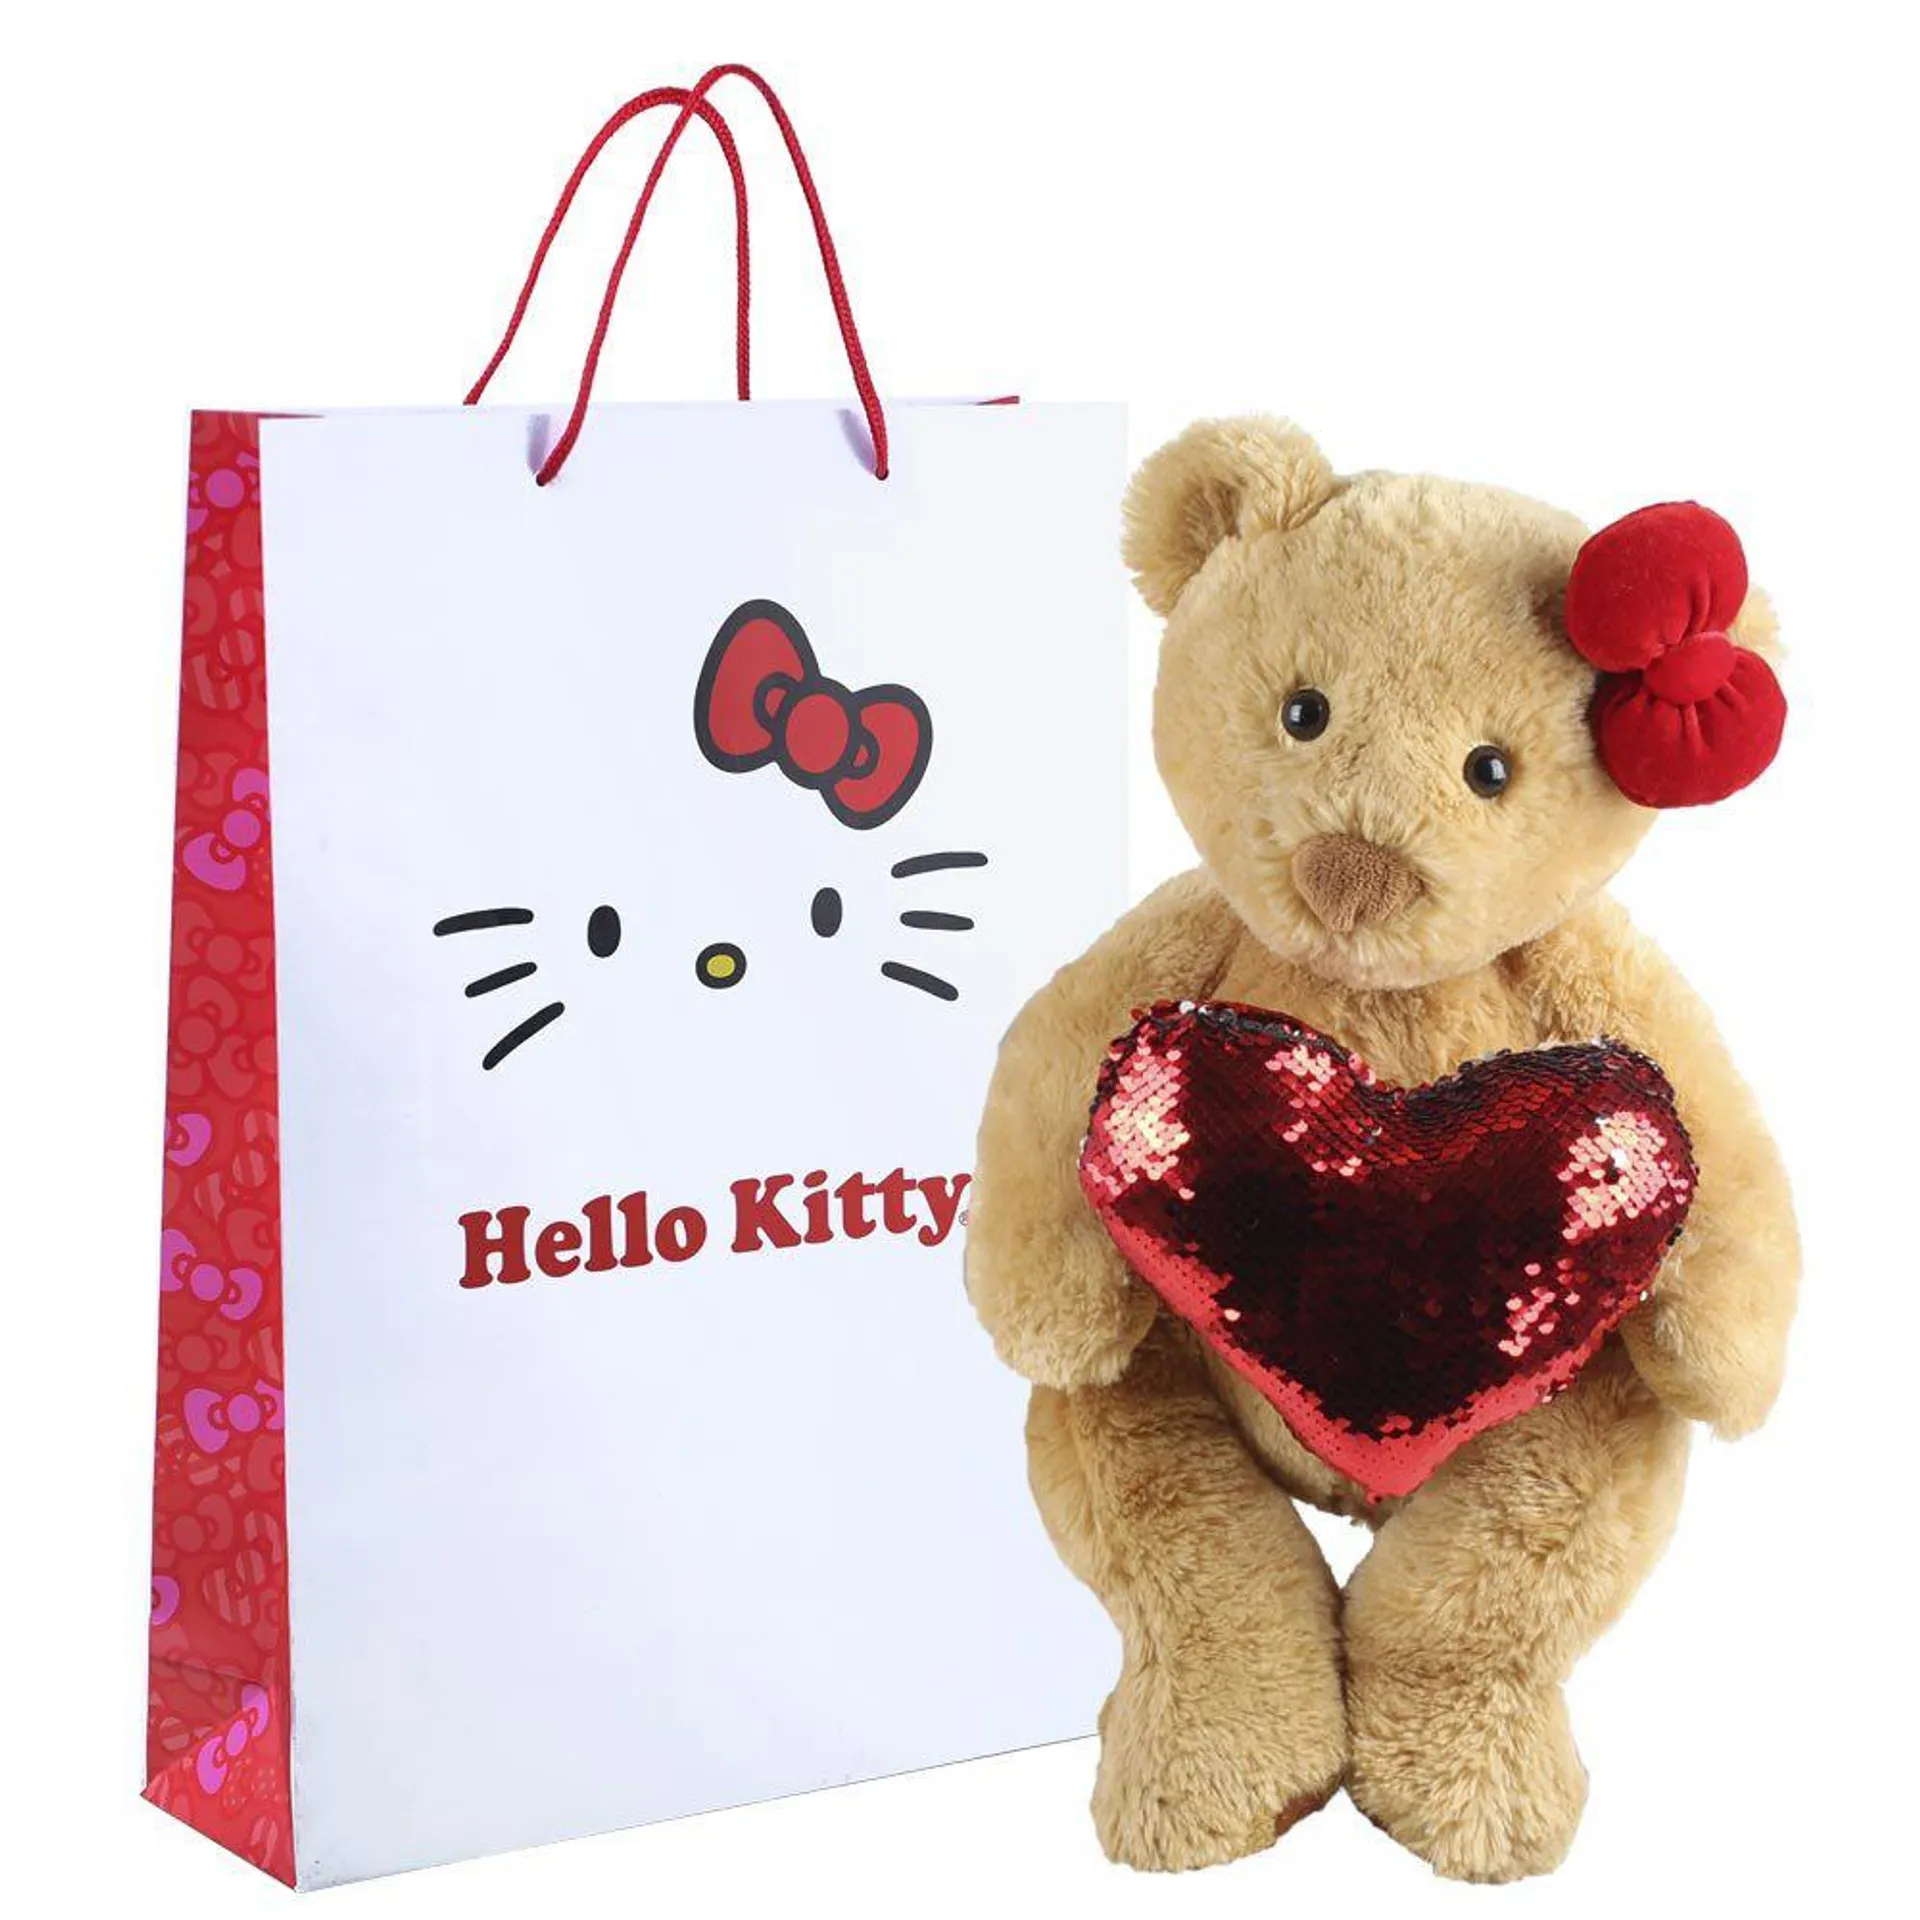 Huguette Corazón y Lazo en Bolsa Lazos Hello Kitty